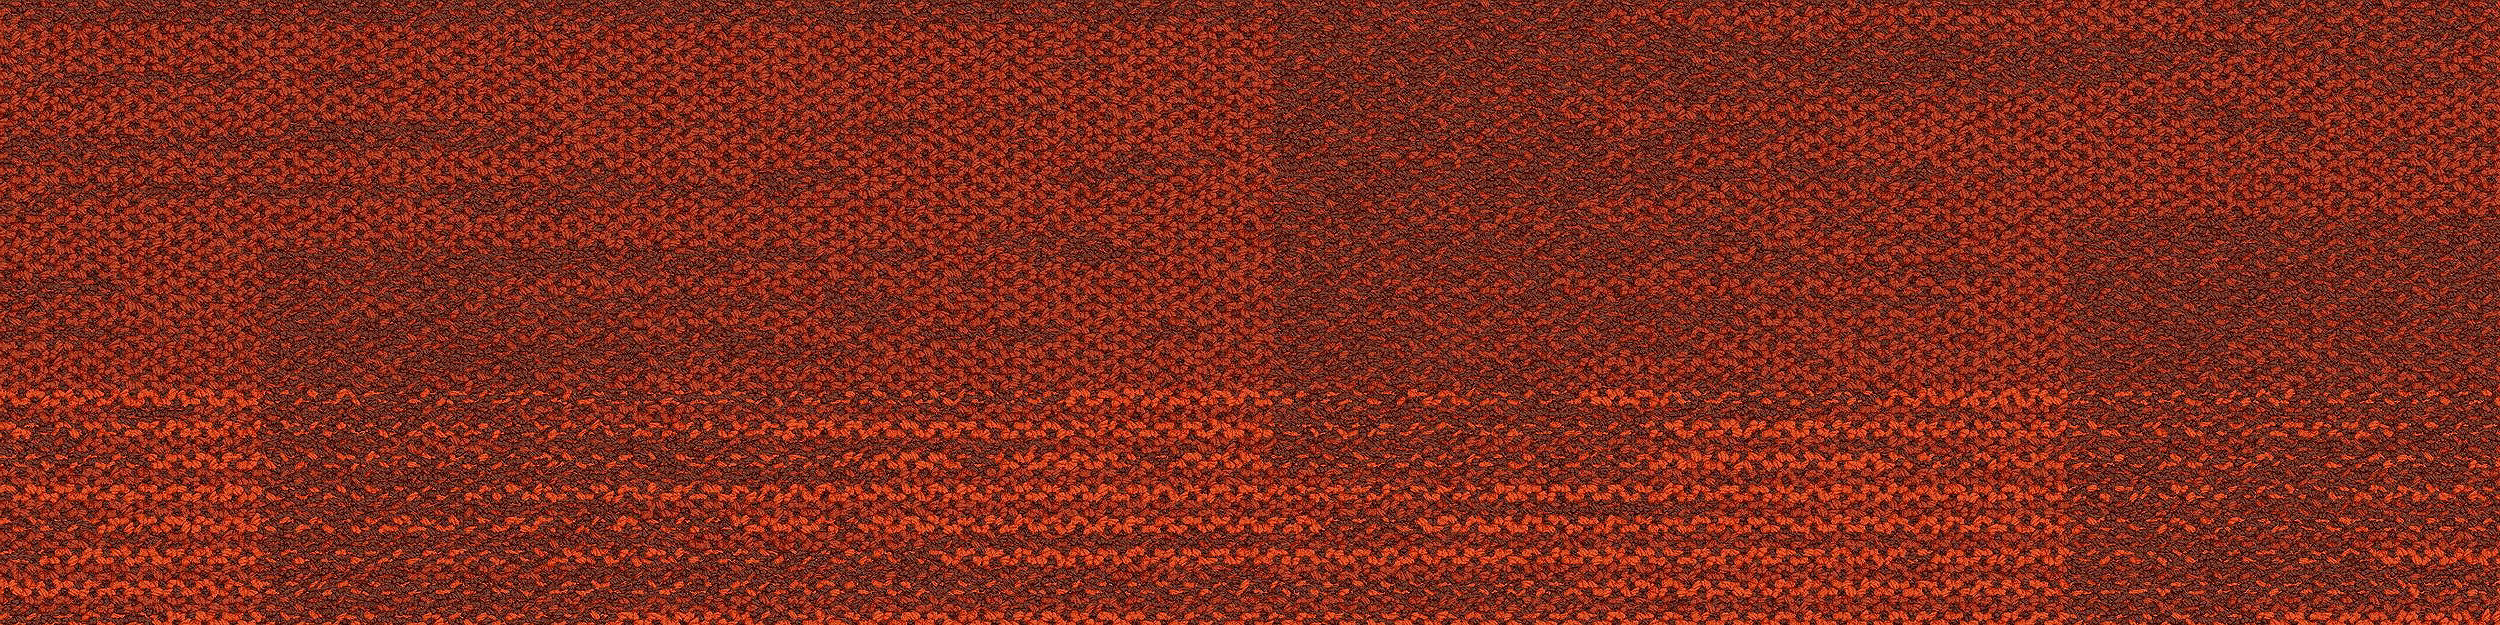 AE317 Carpet Tile In Persimmon imagen número 13